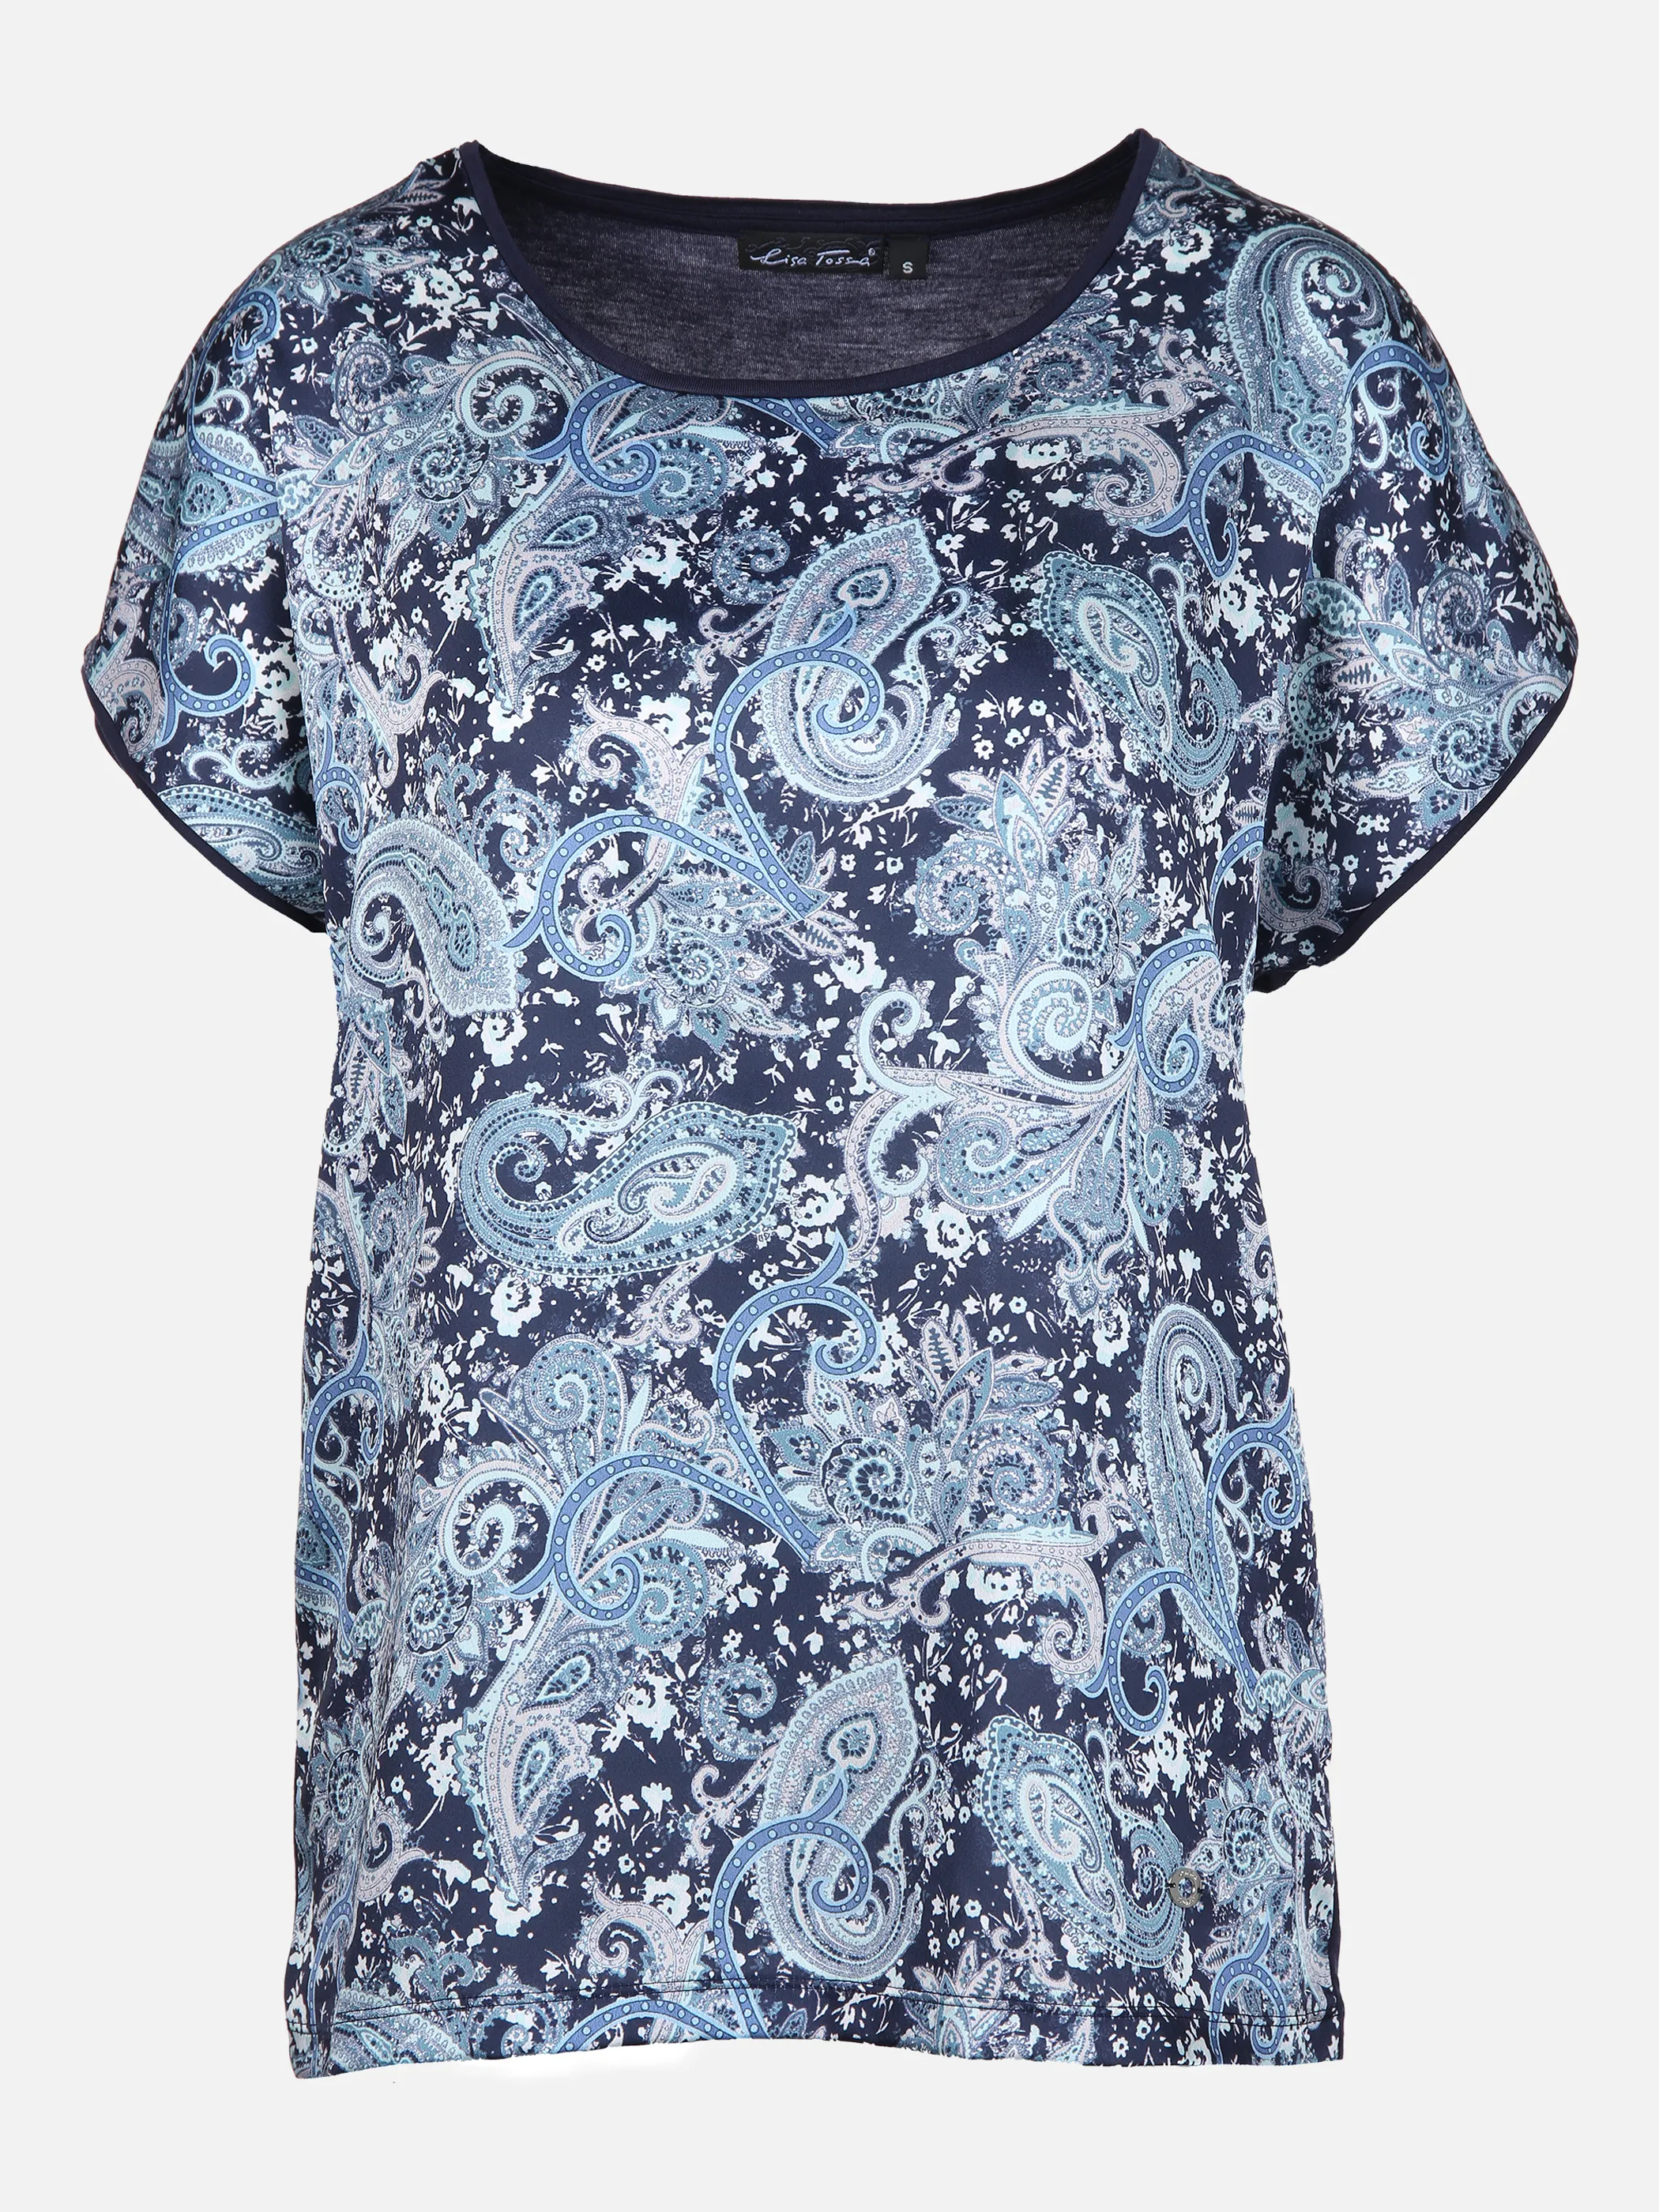 Lisa Tossa Da-Materialmixshirt Paisleydru Blau 851093 MARINE/SAL 1